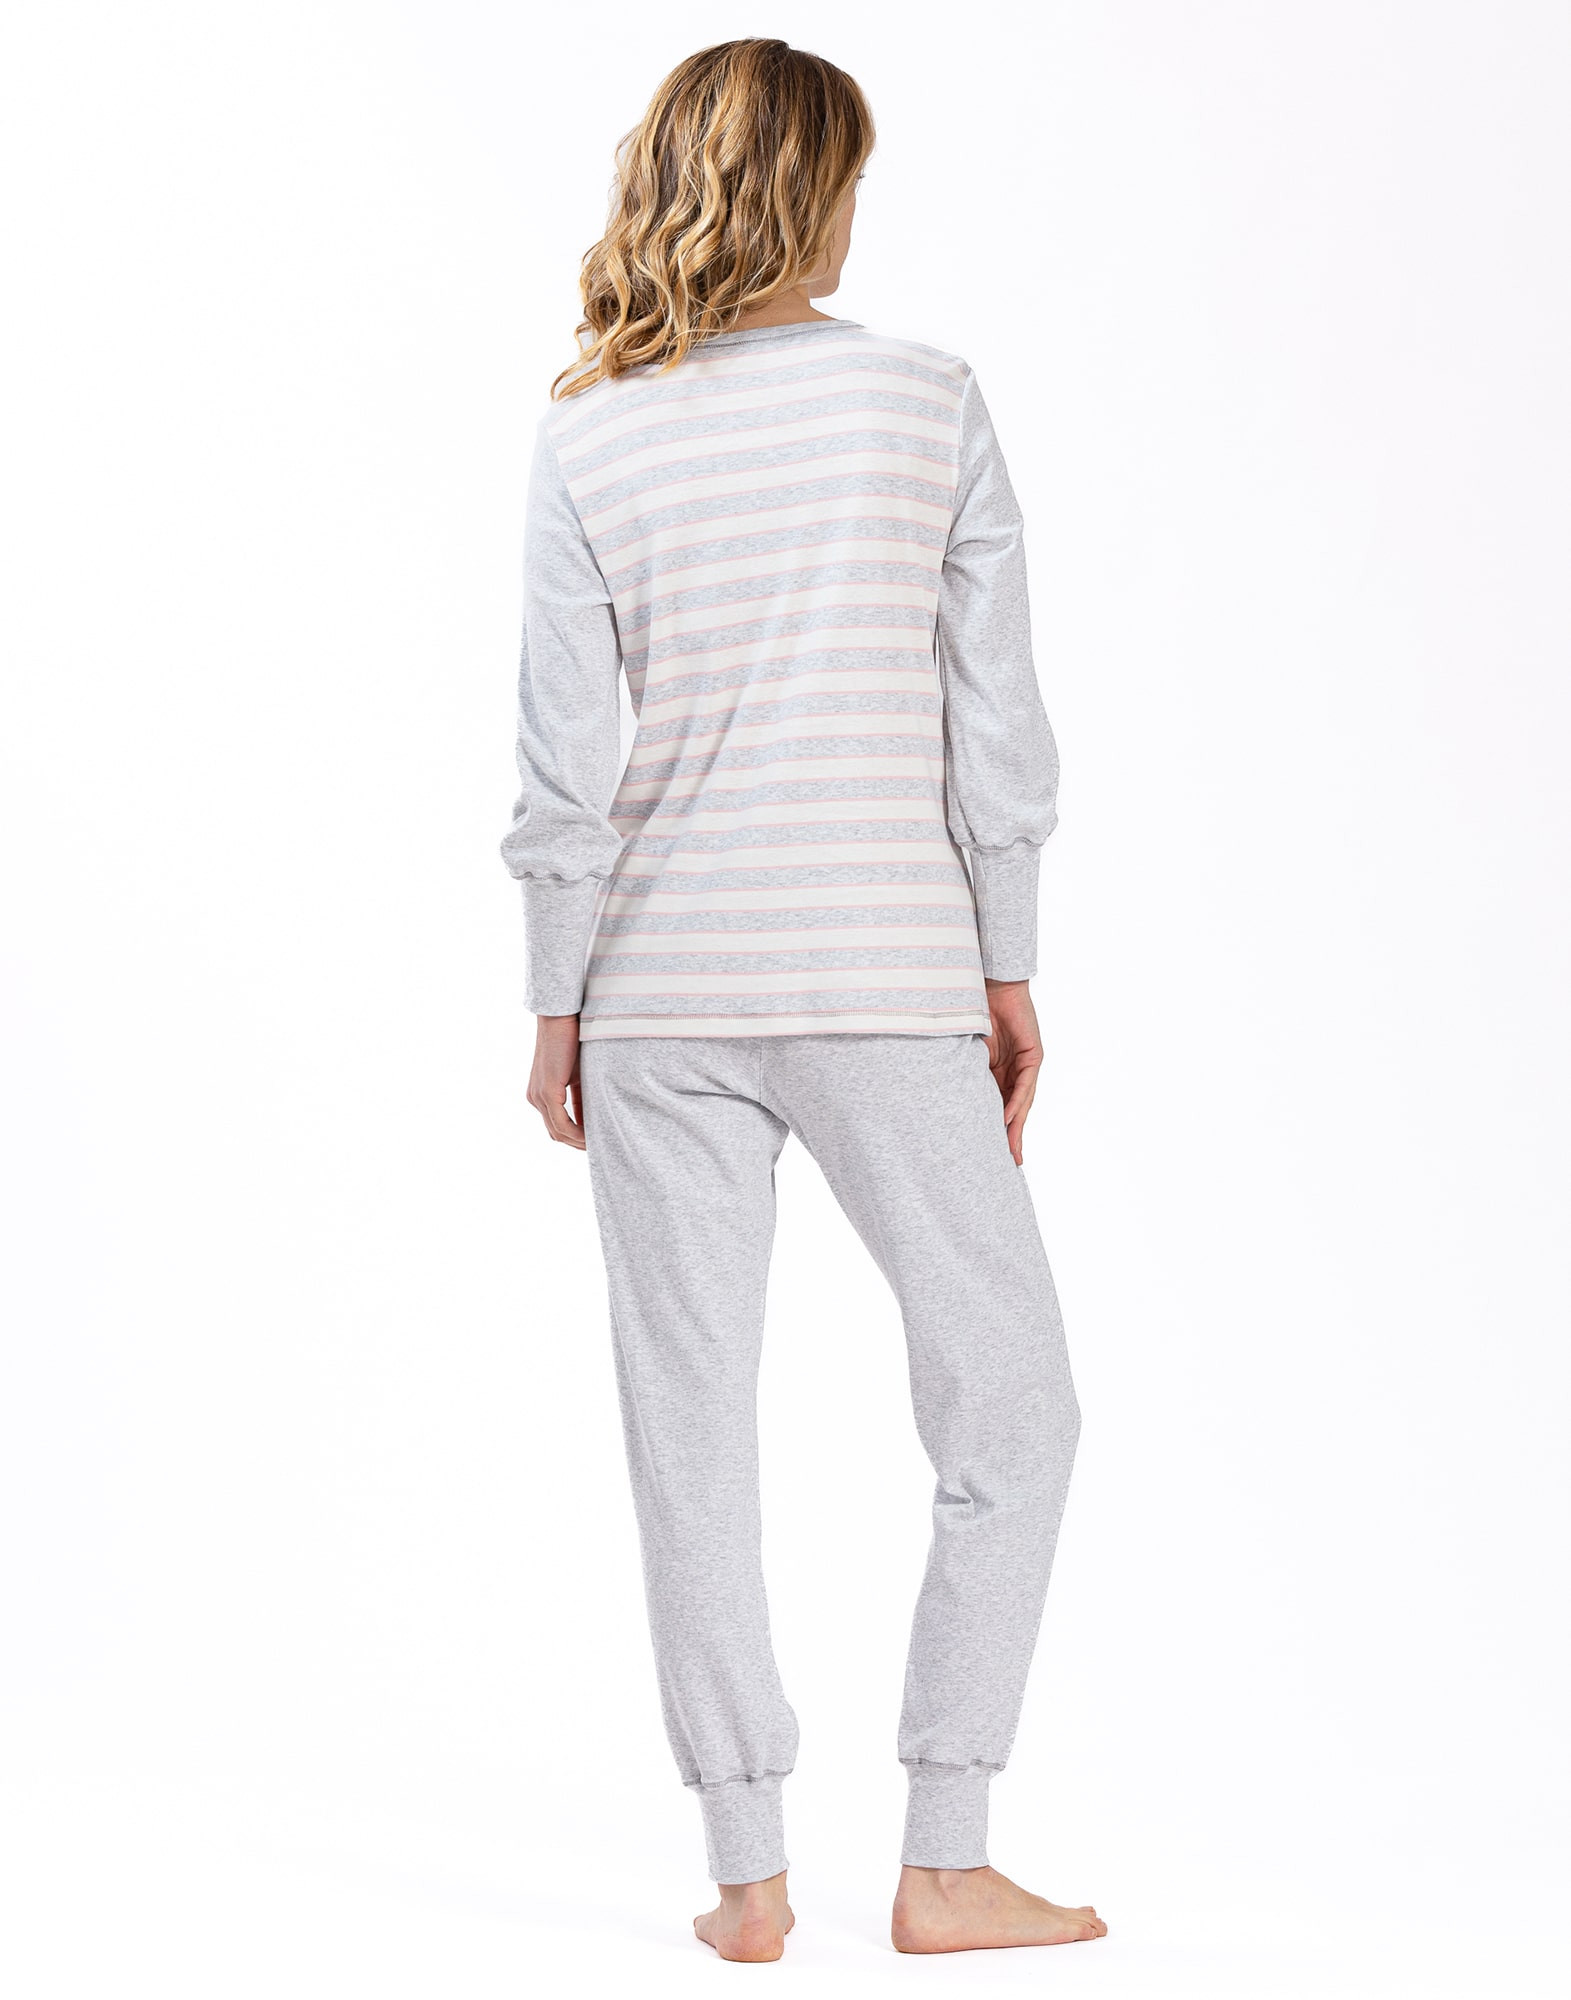 100% cotton interlock pyjamas HYGGE 602 pink